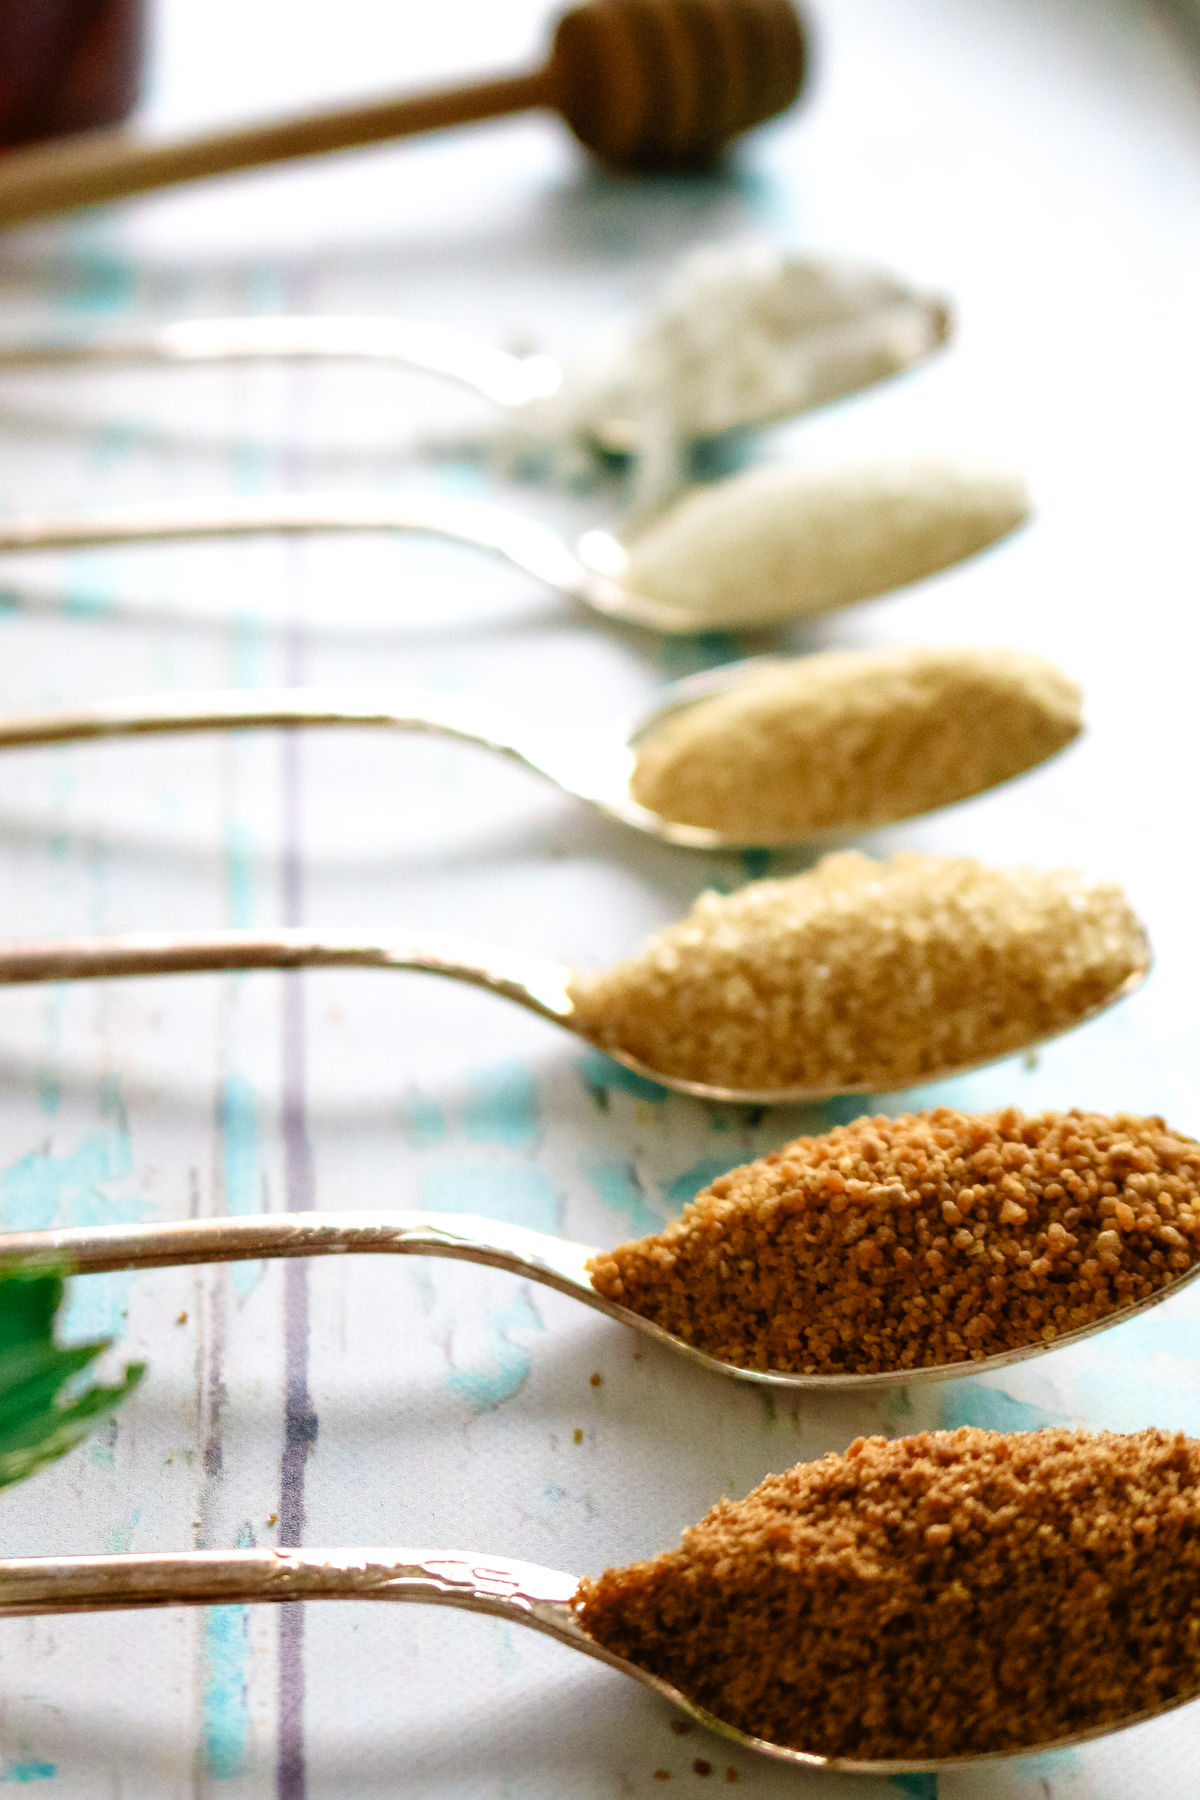 spoonfuls of natural and unrefined sweeteners like brown sugar, sucanat, and turbinado.